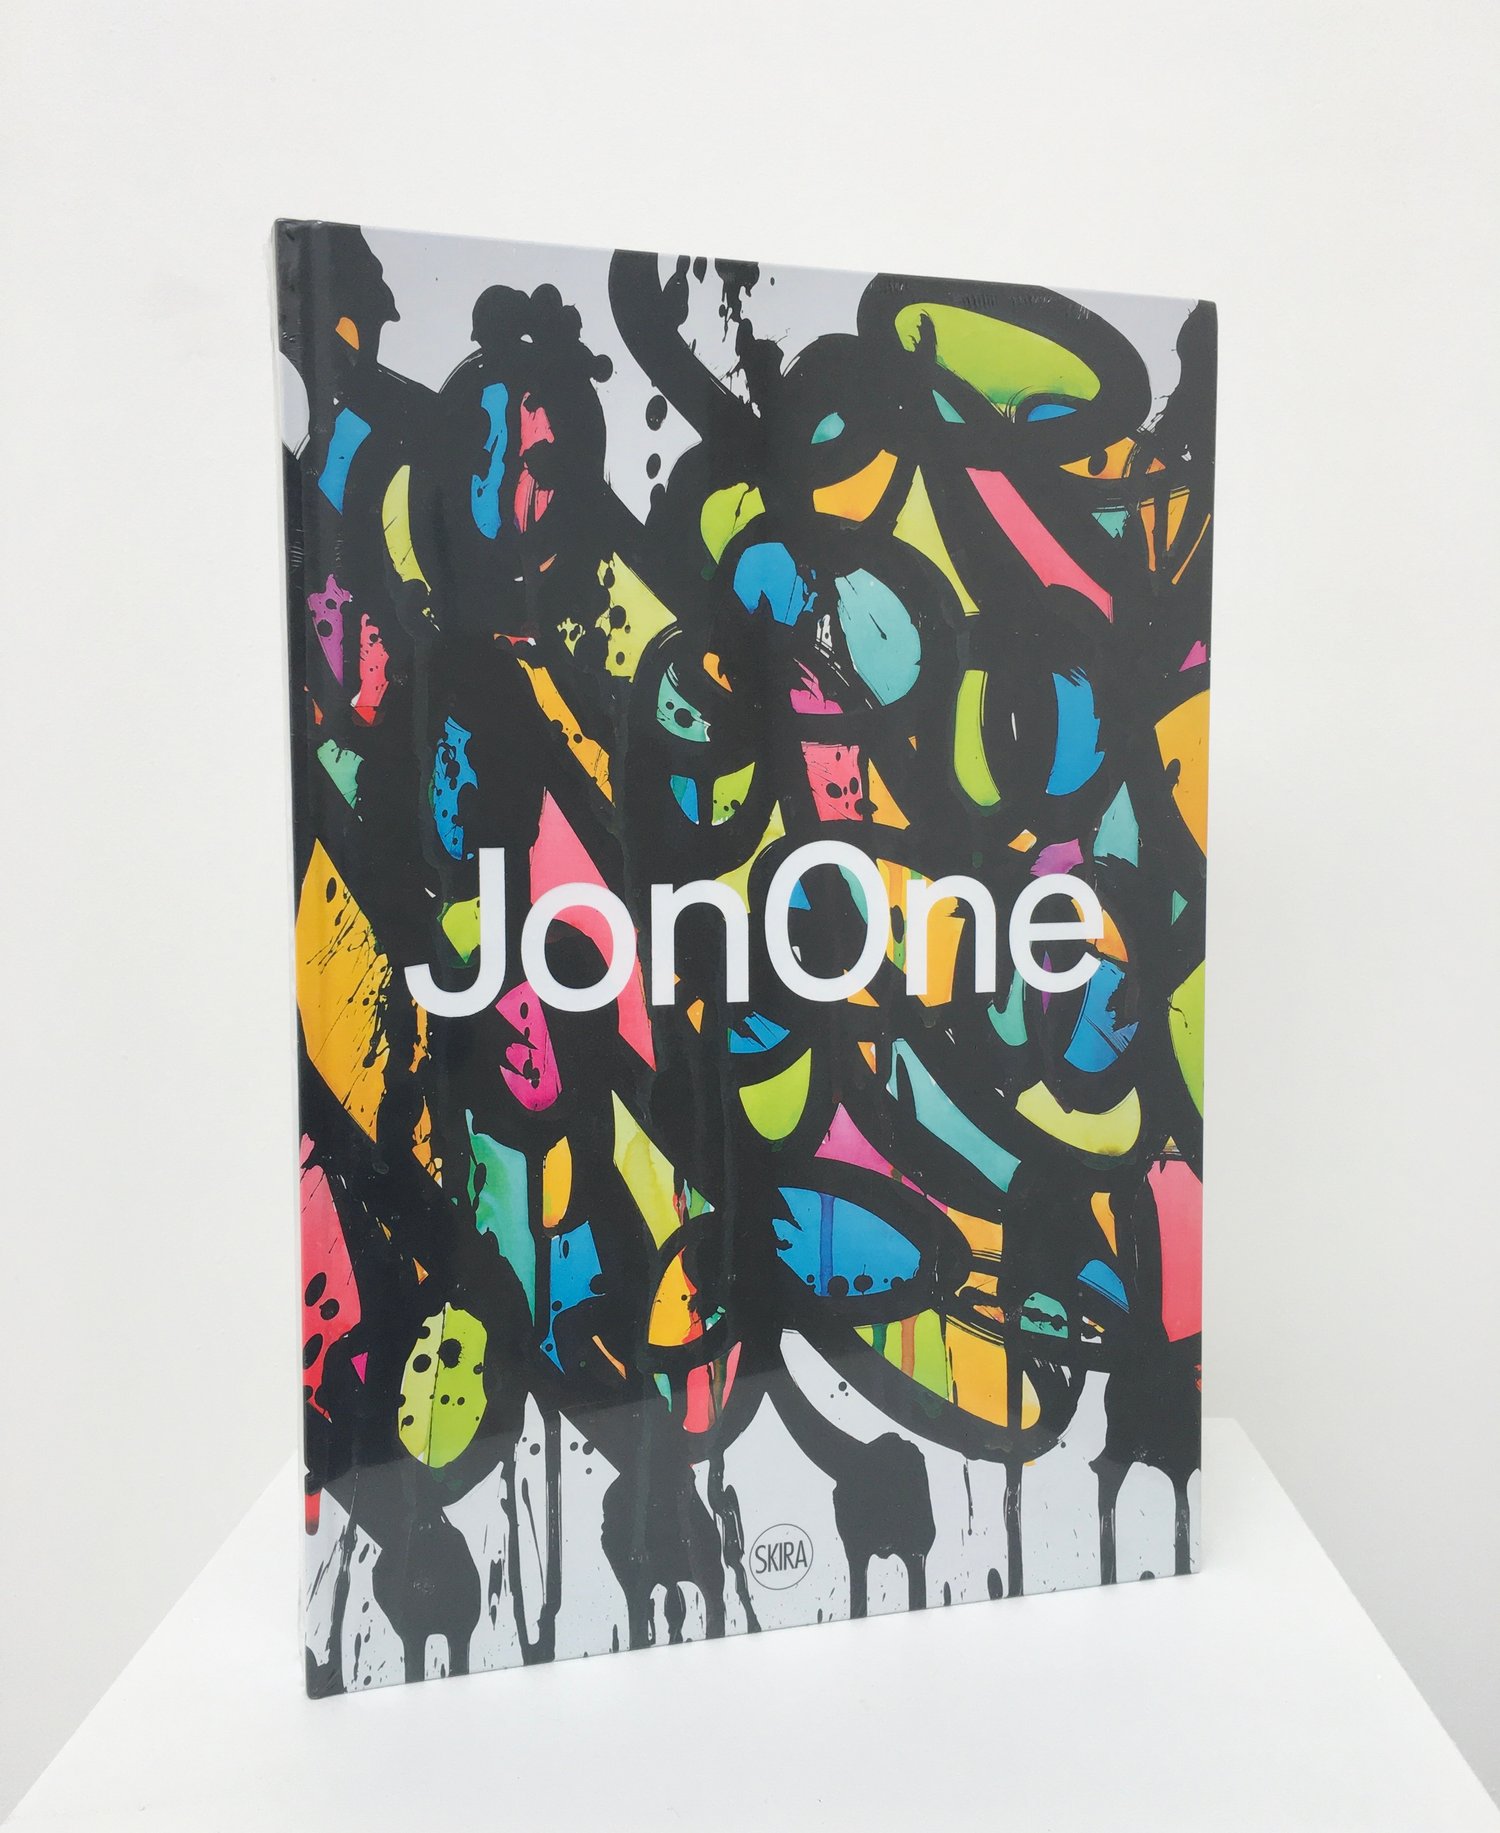 Jonone - "JonOne" (limited edition)